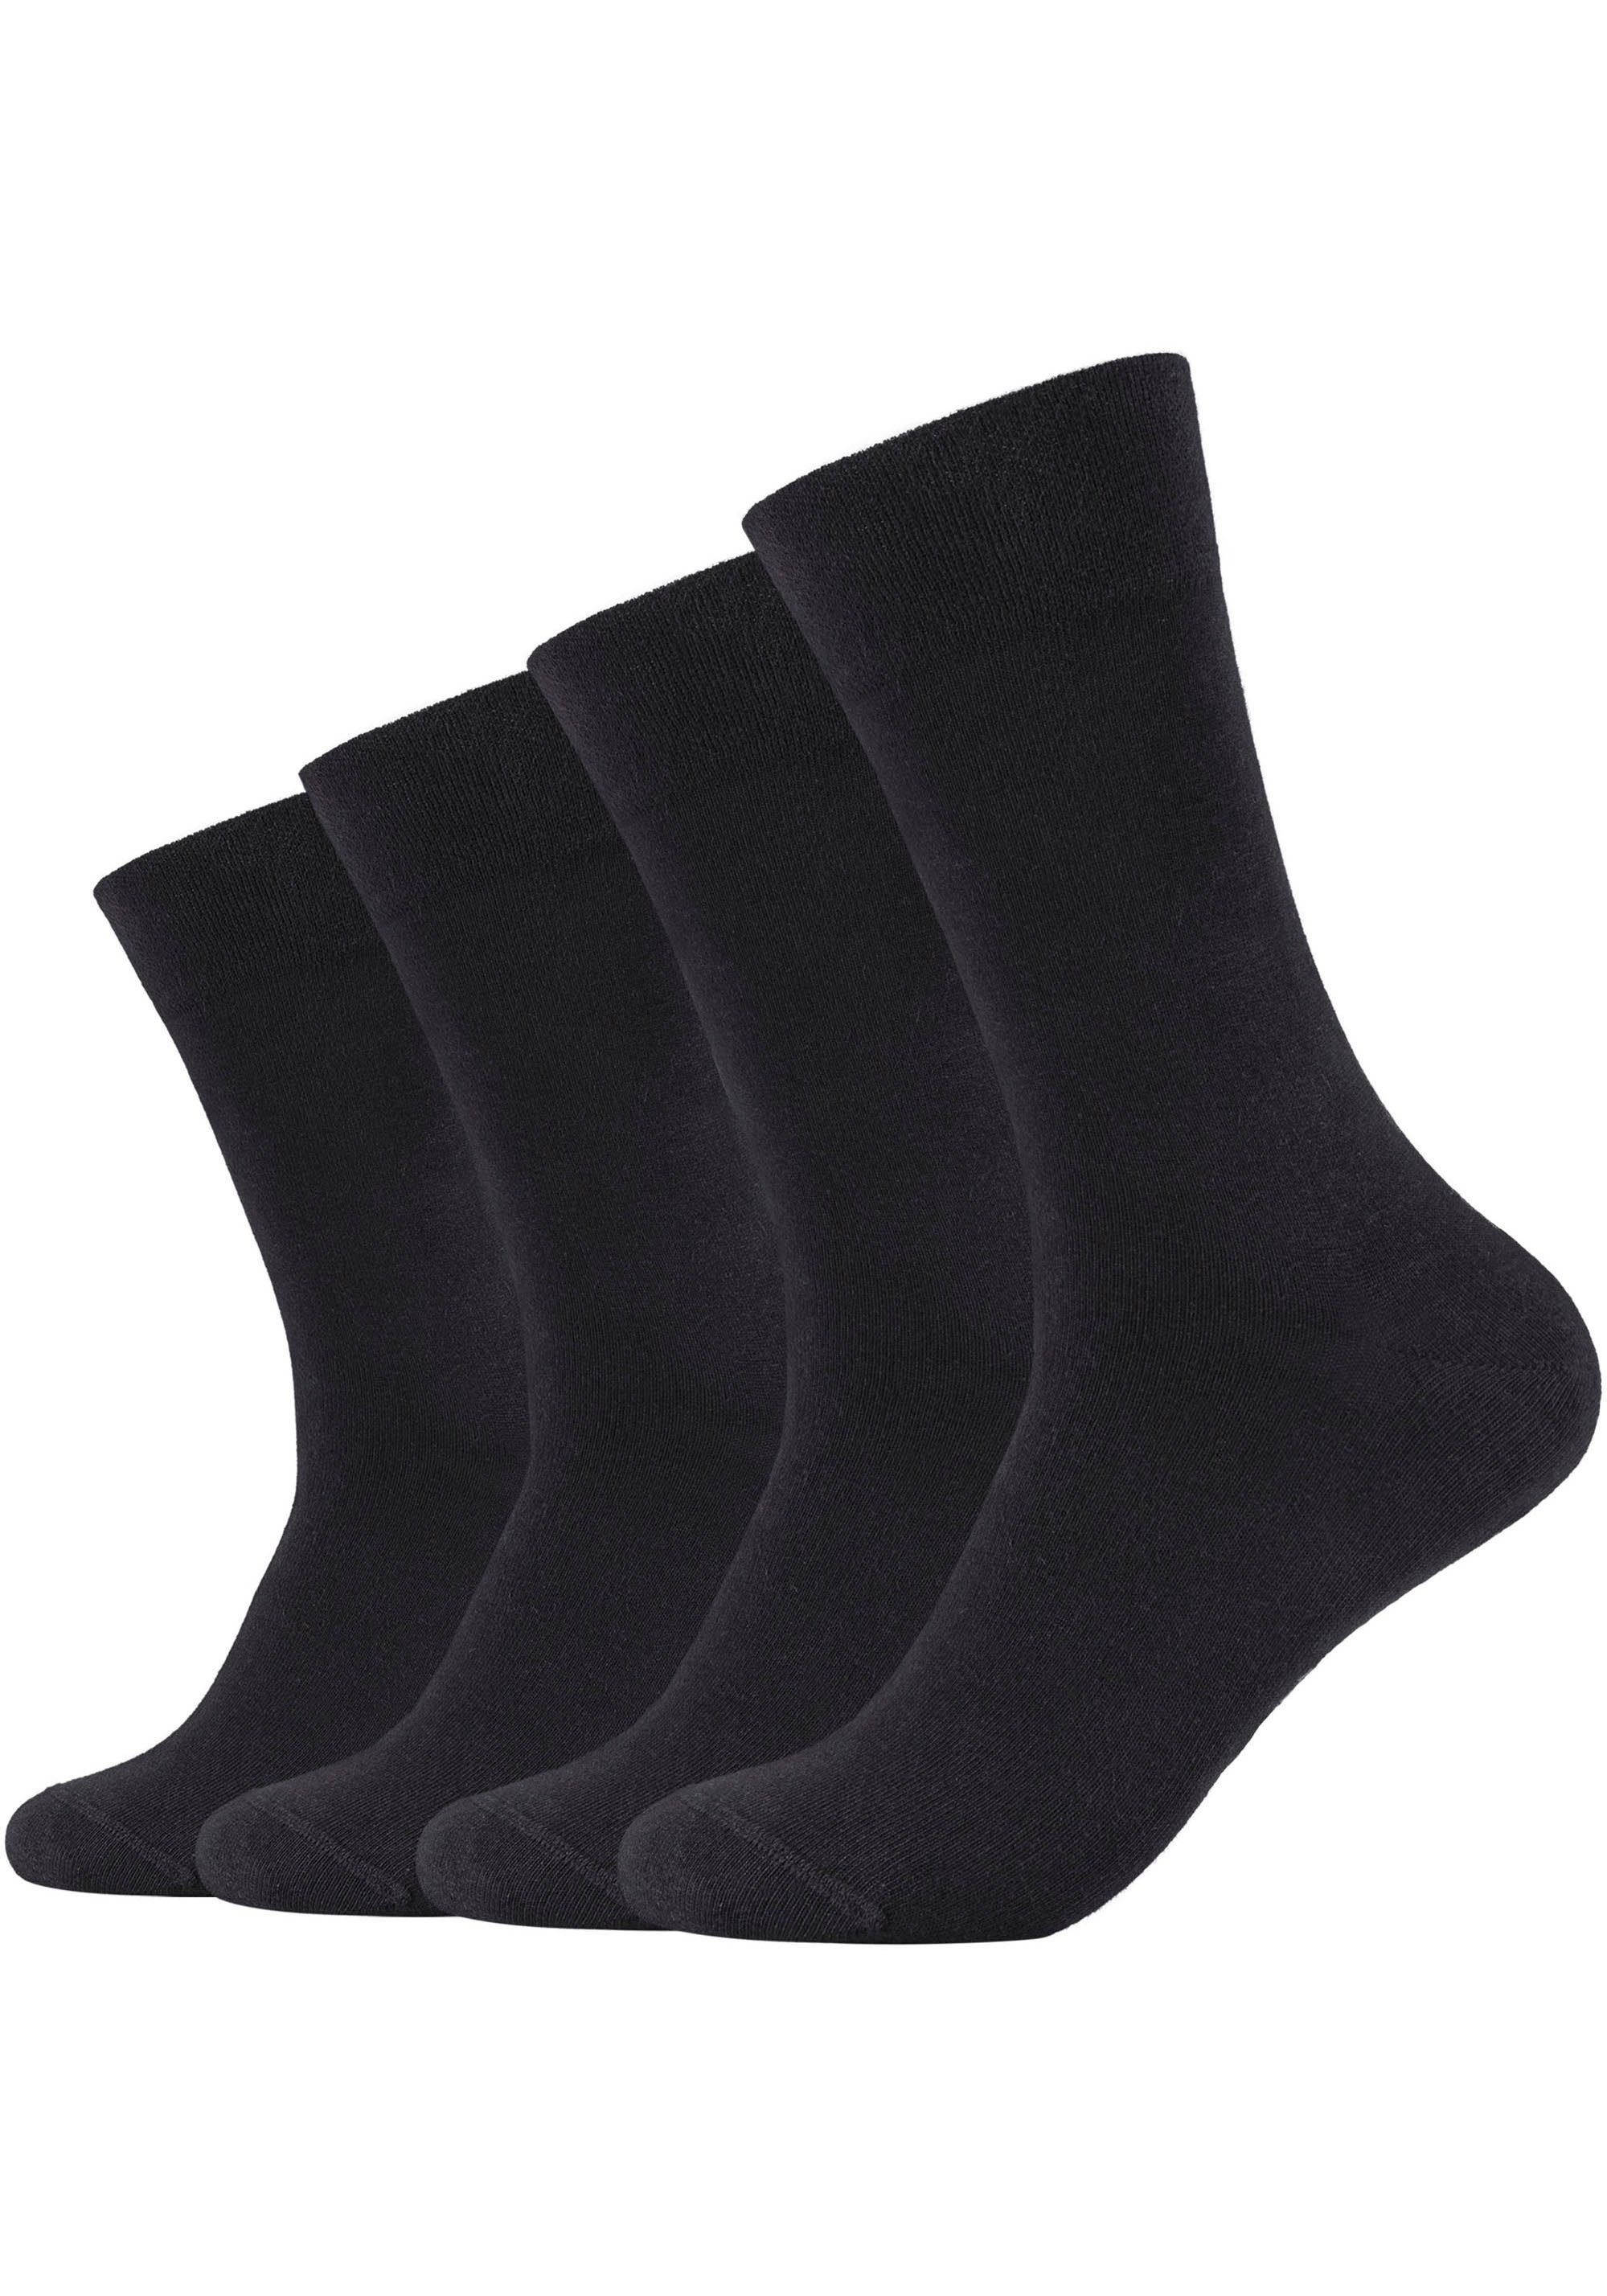 Socken 97% (Packung, Atmungsaktiv: 4-Paar) schwarz Bio-Baumwolle Camano